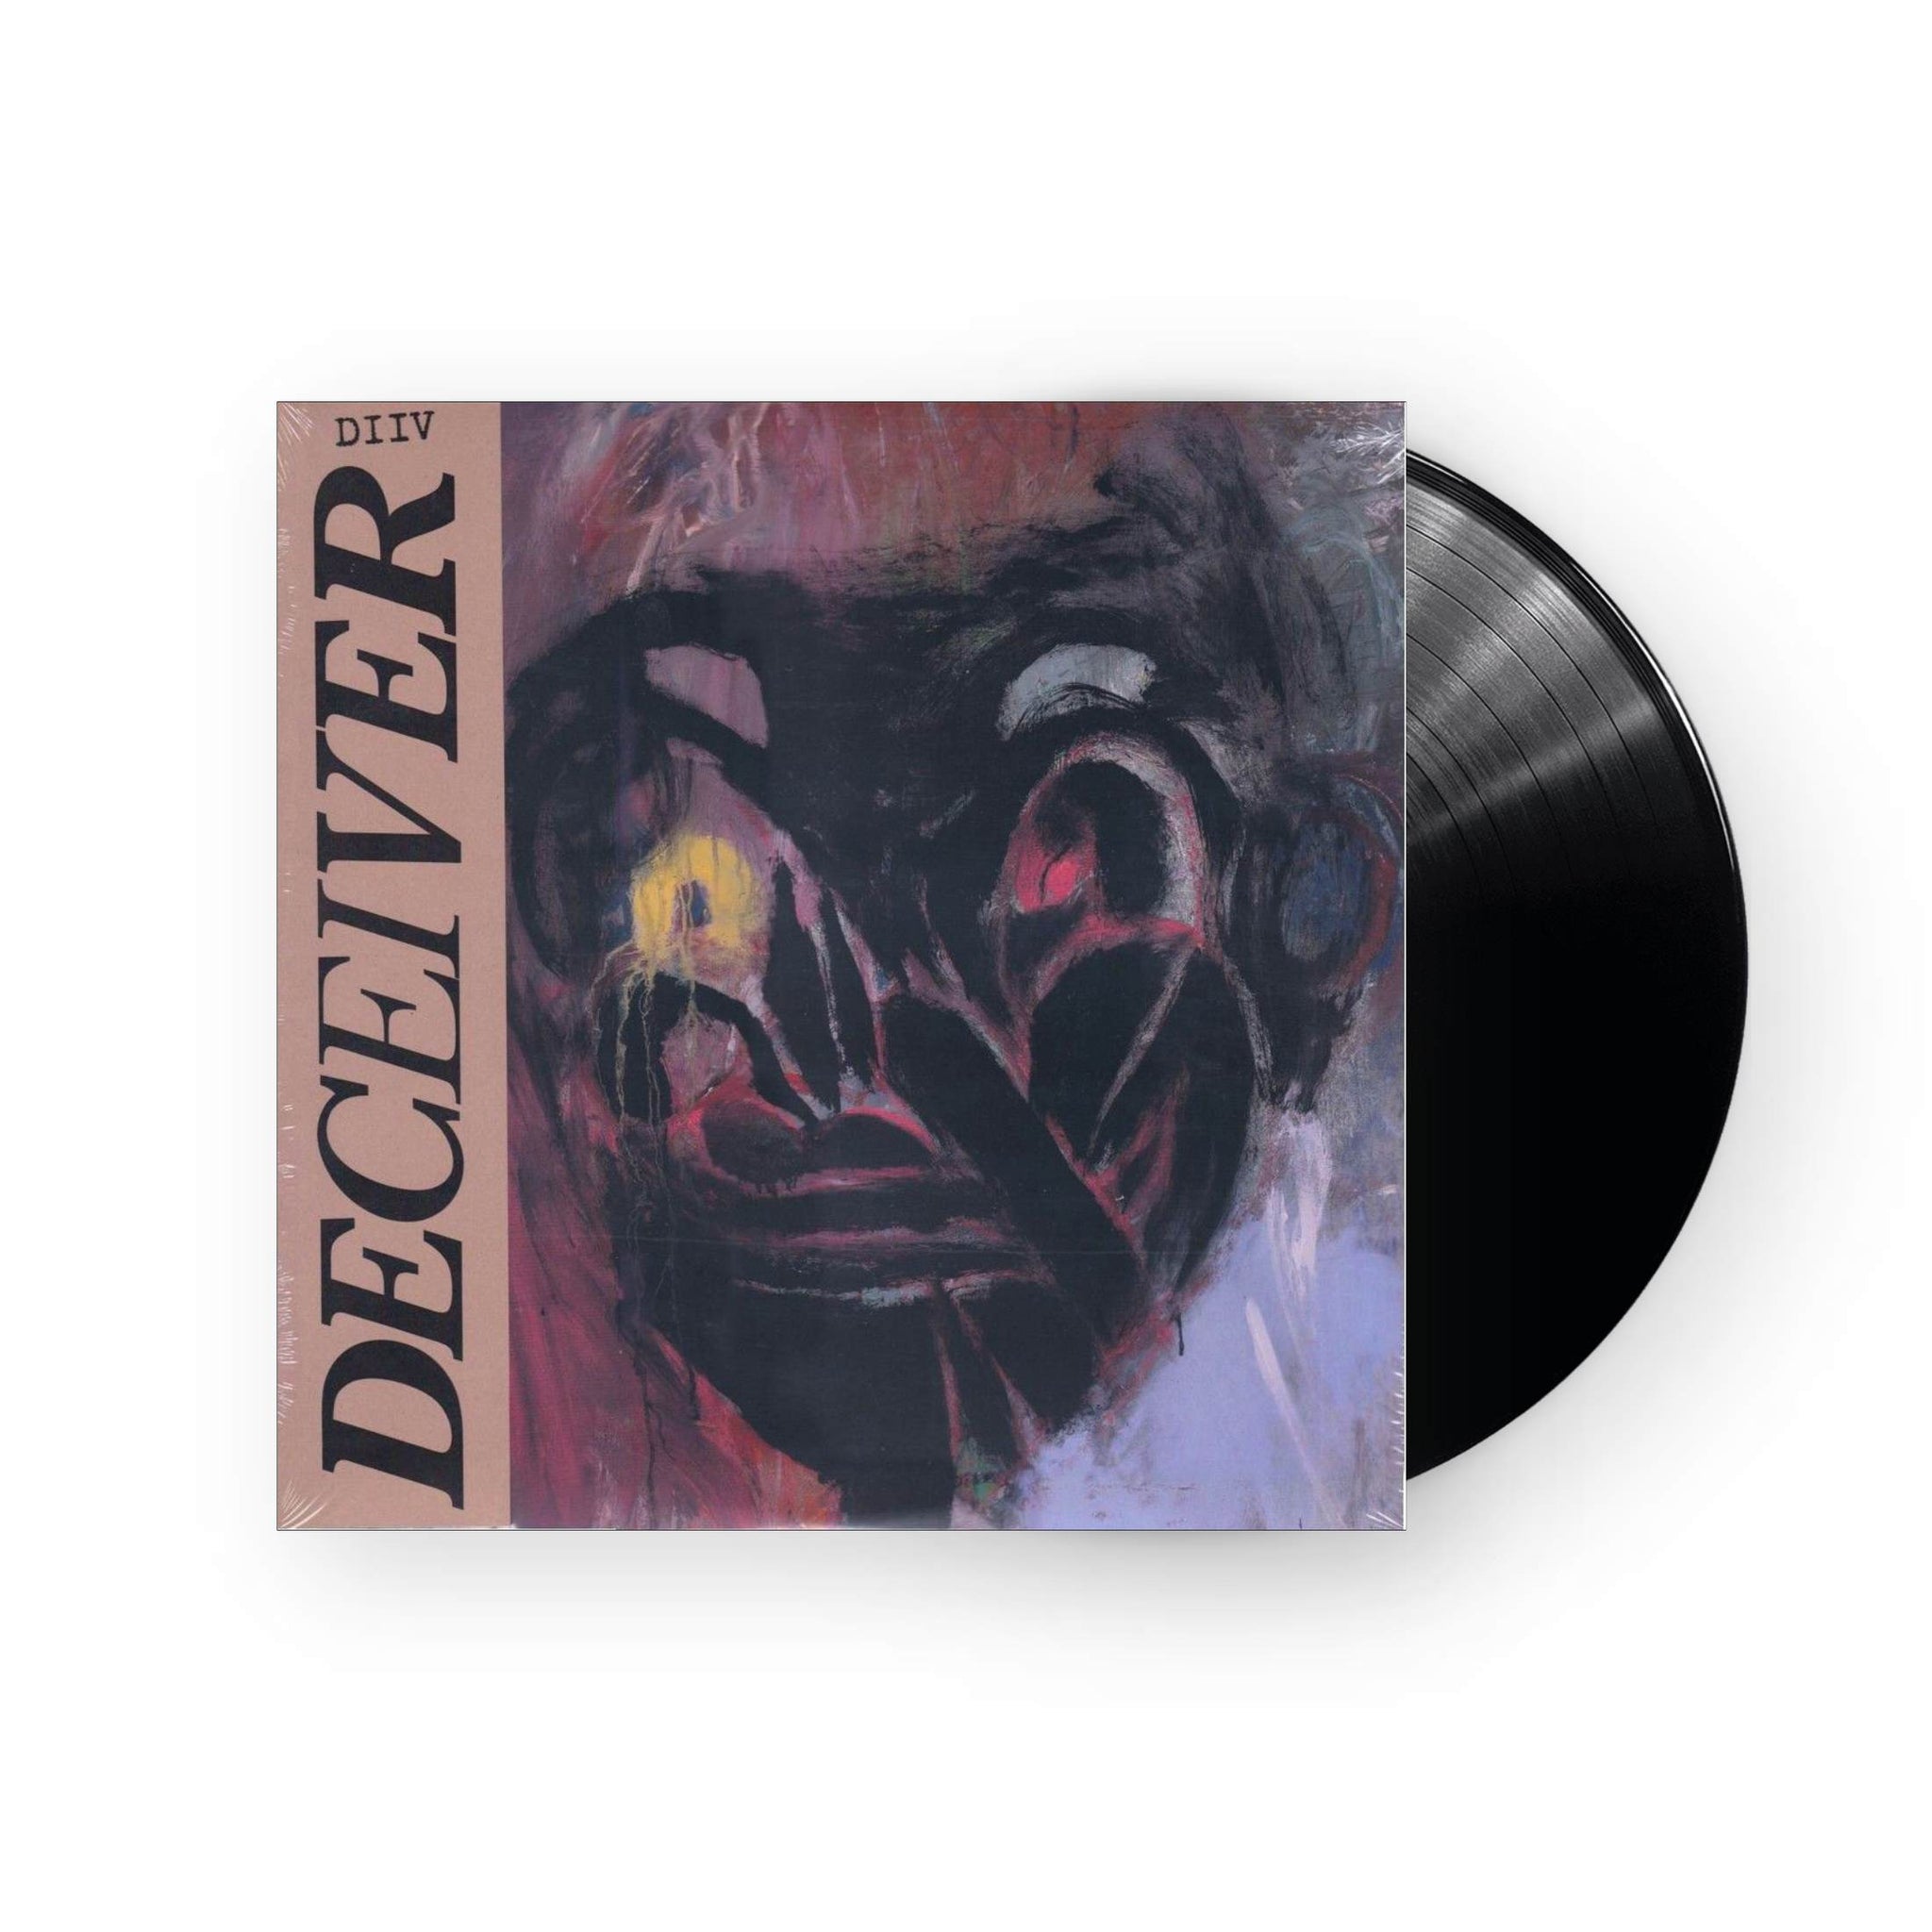 DIIV - Deceiver LP ( Black  Vinyl)